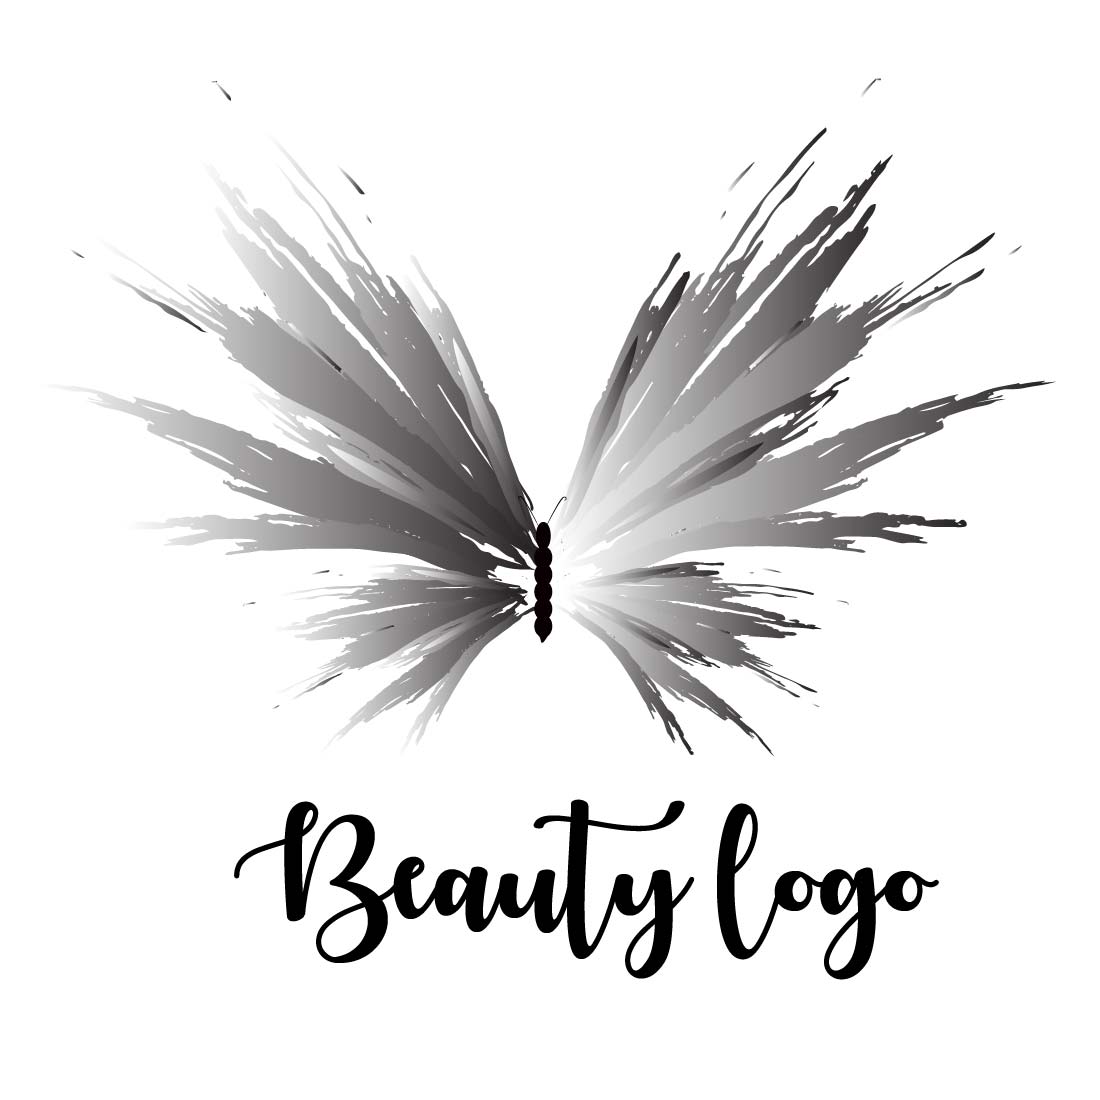 Beauty logo , spa logo preview image.